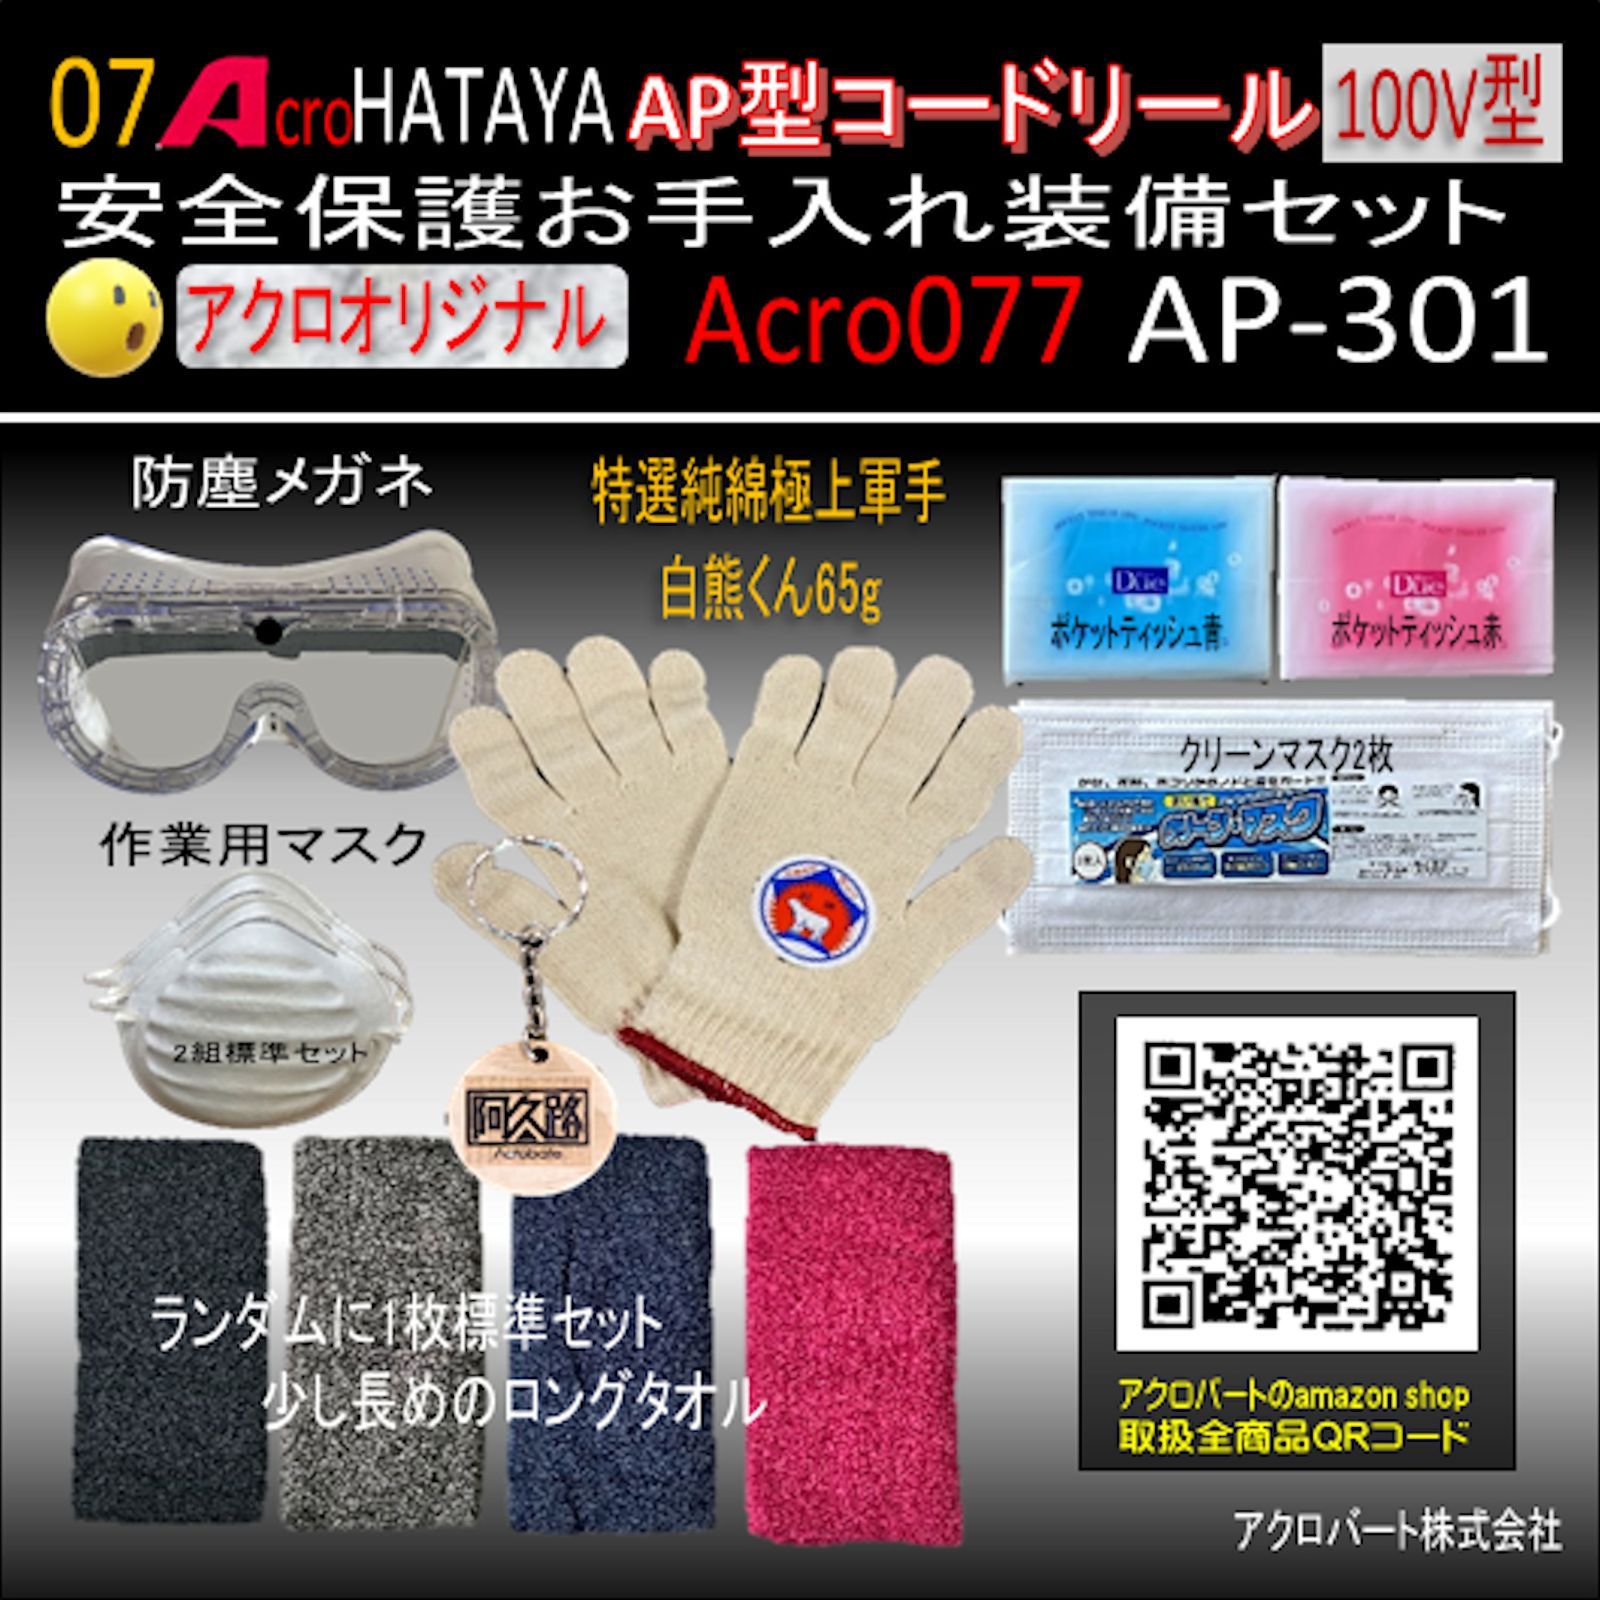 Acro077&HATAYA-AP型コードリールAP301安全お手入れ装備セット - メルカリ